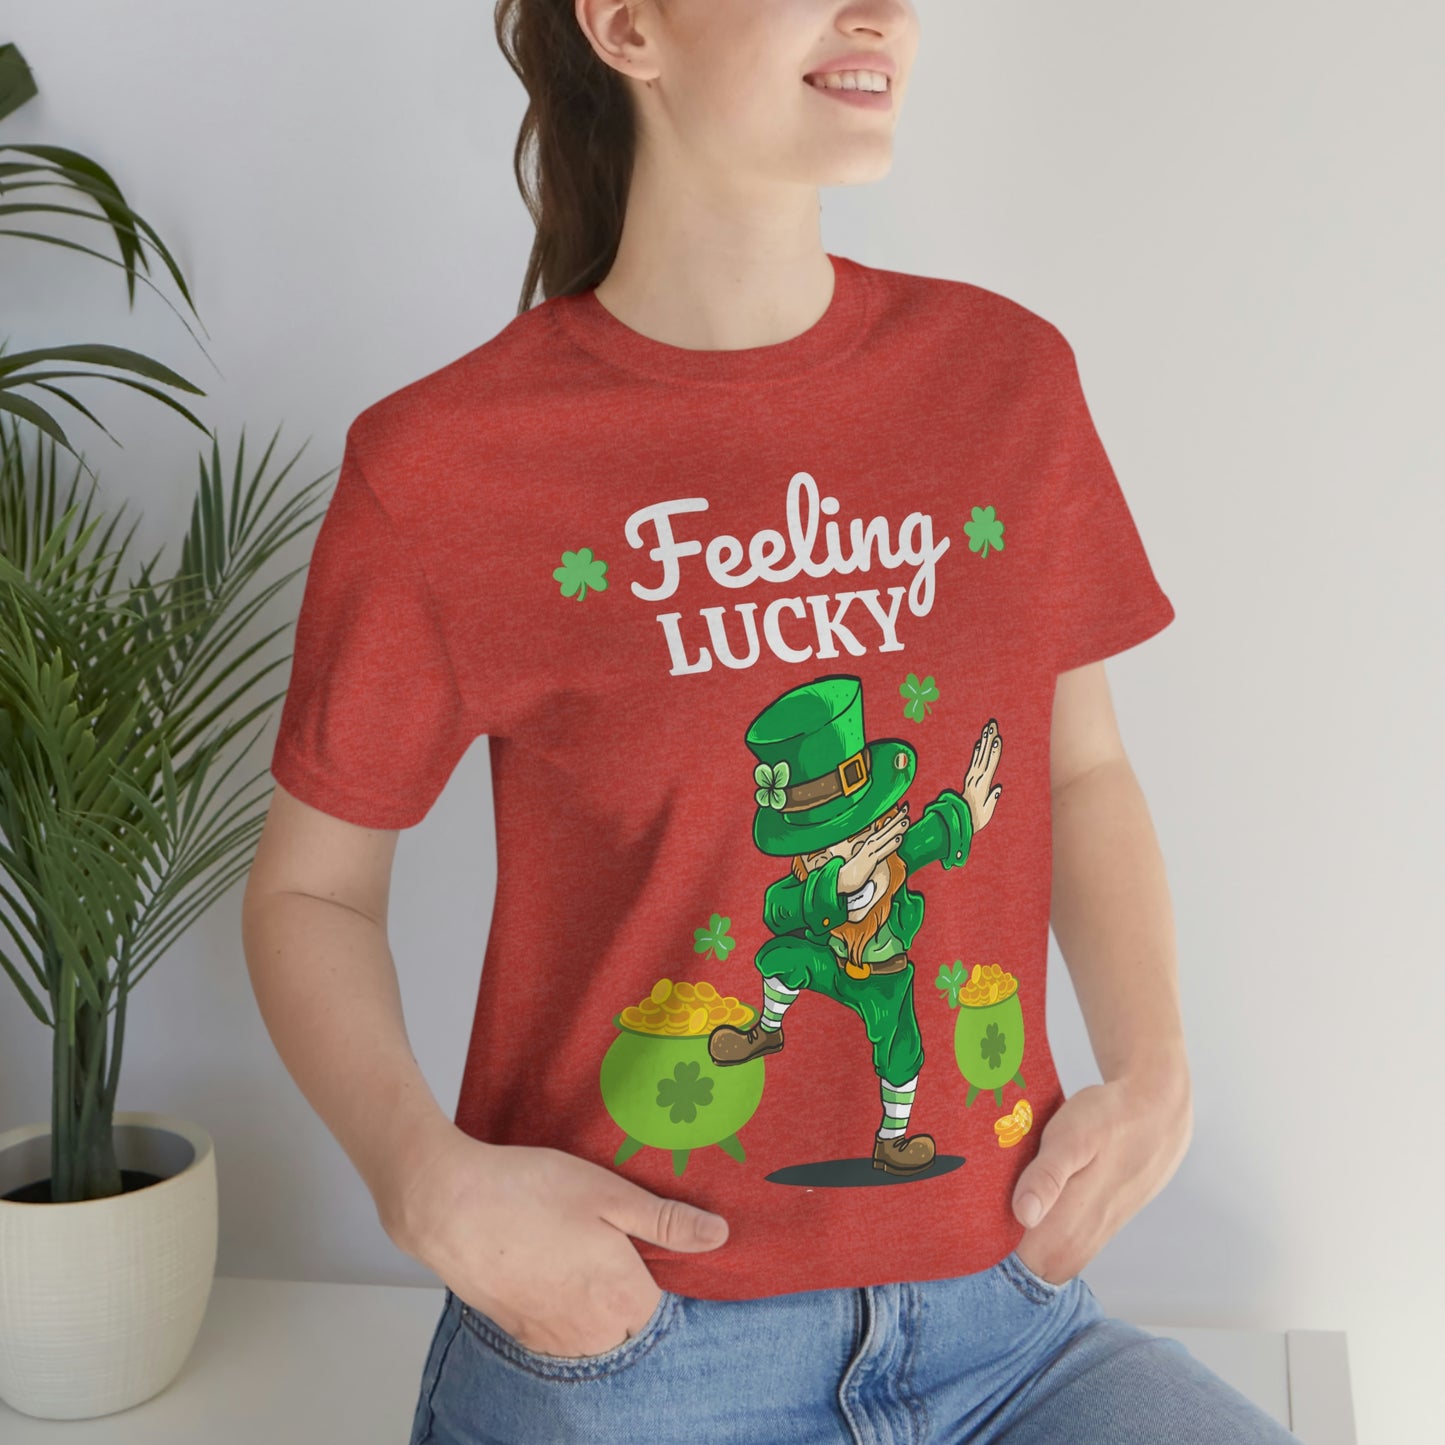 Feeling Lucky St Patrick's Day shirt - Shamrock shirt - shenanigans shirt St Paddys day Shirt - St Patricks day gift